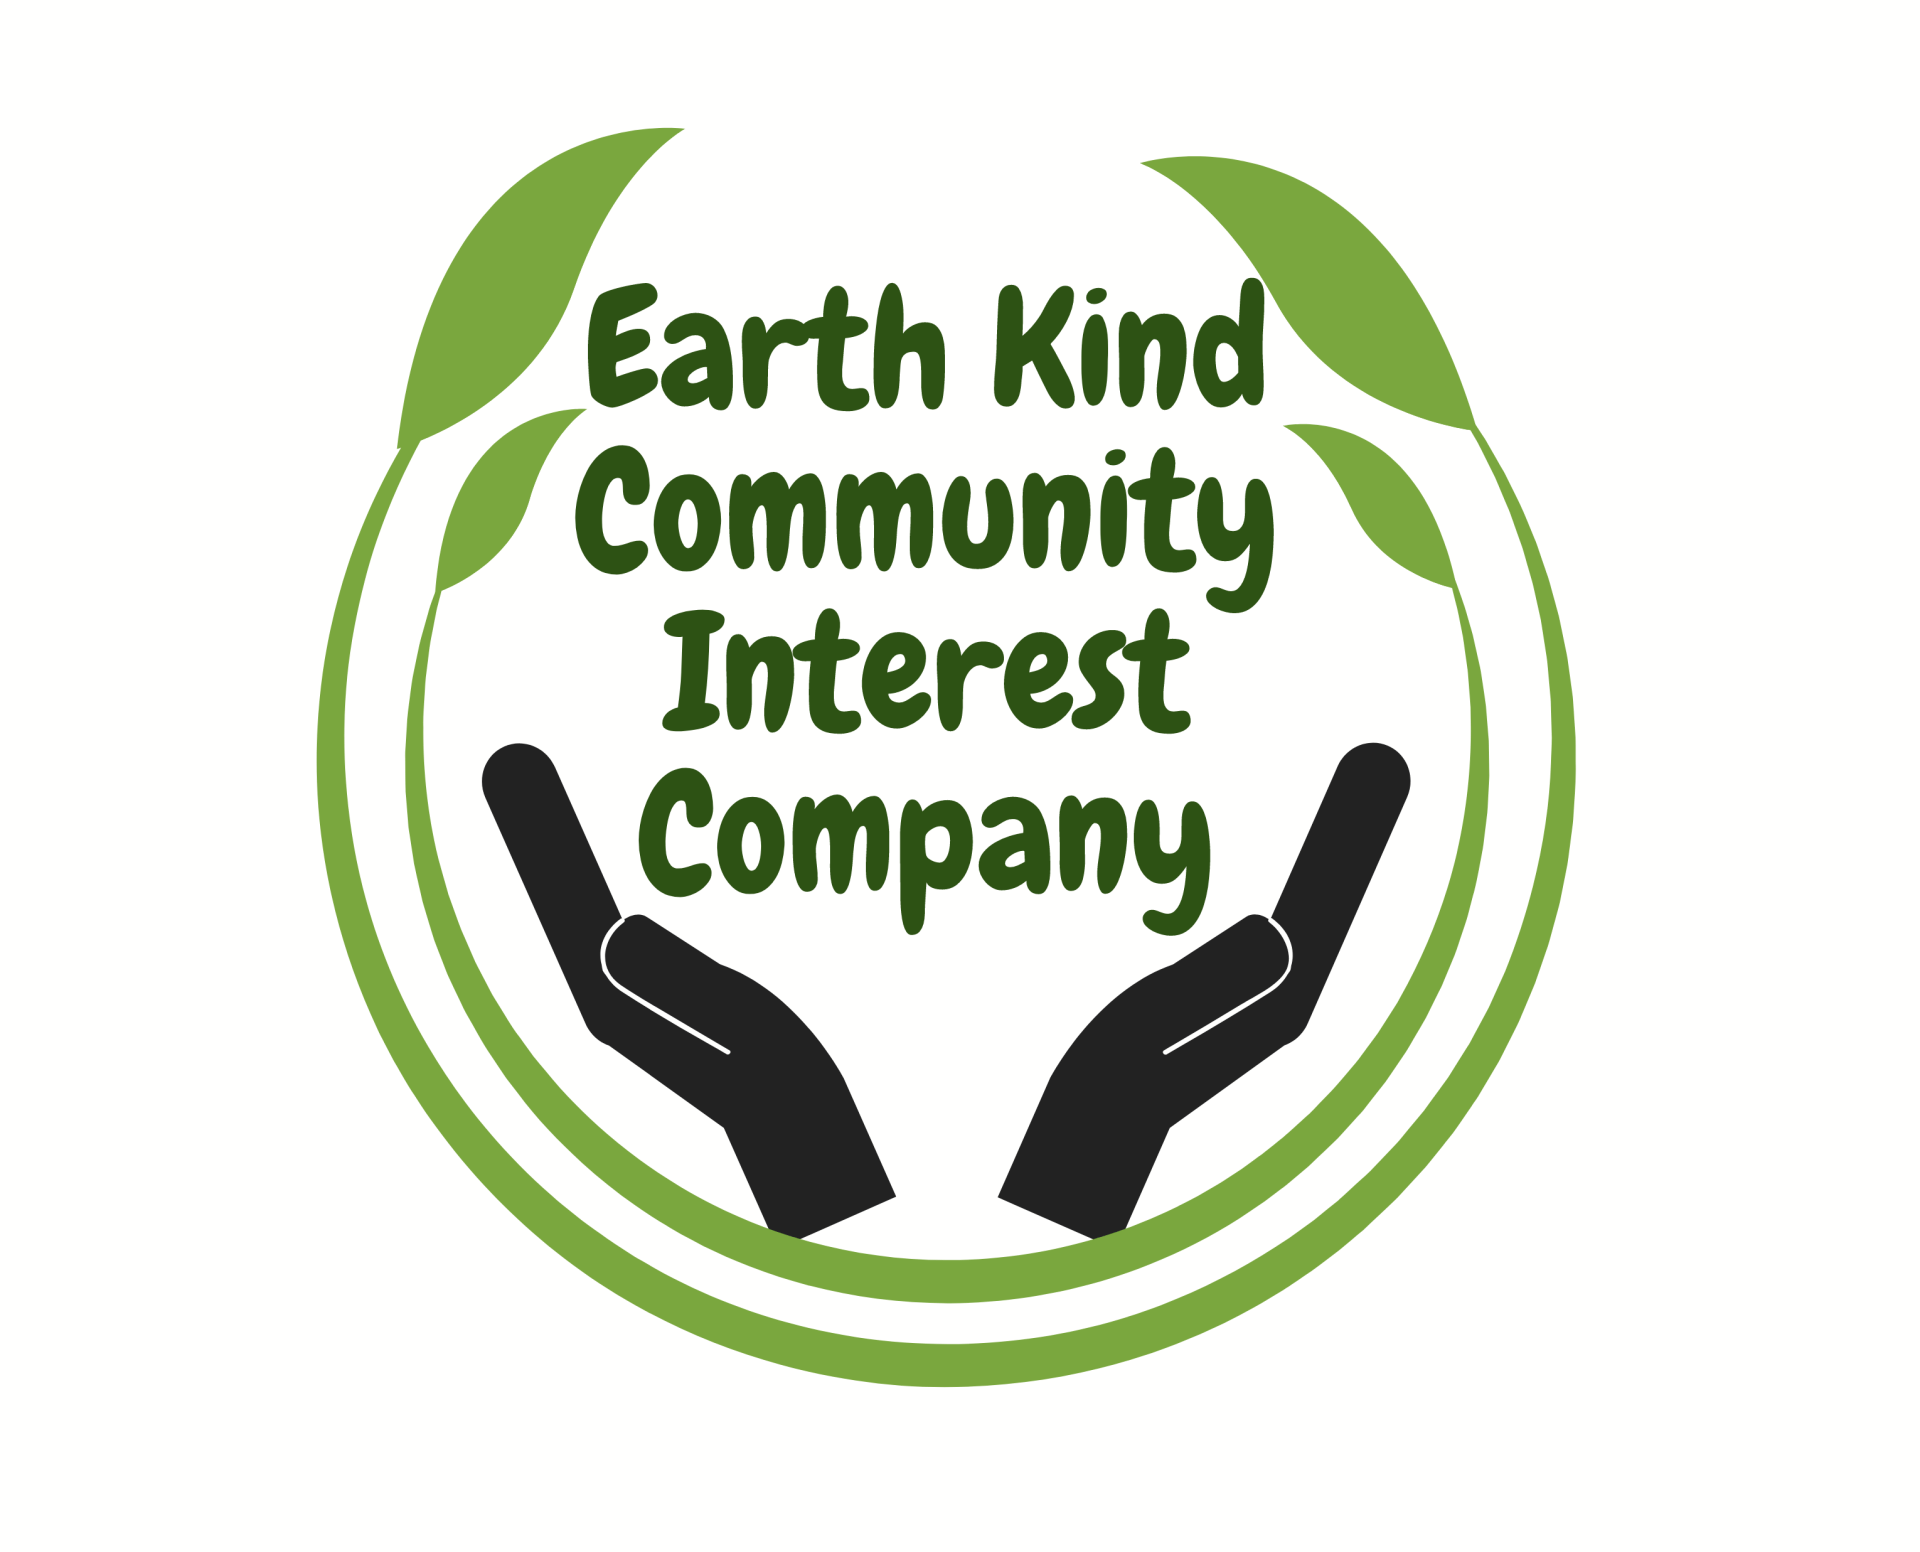 Earth Kind Community Interest Company